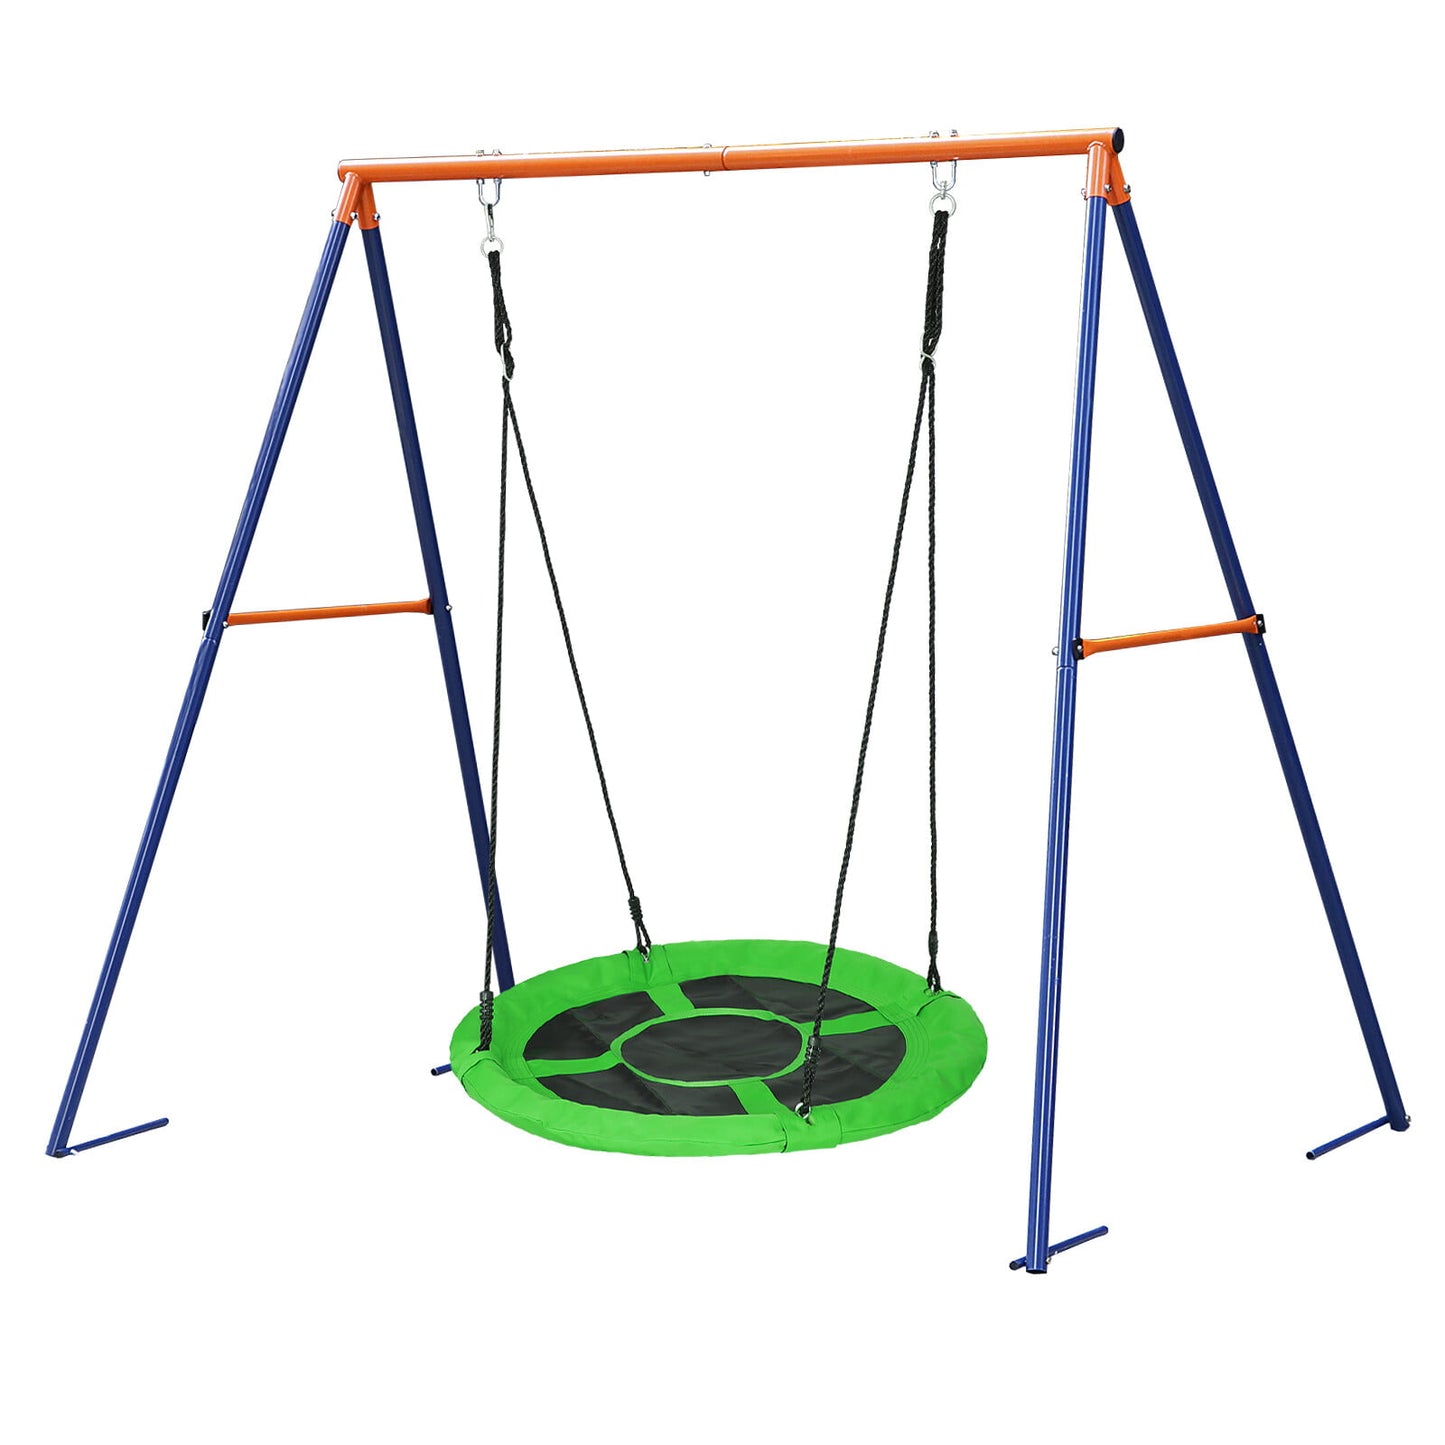 ZENY 40" Tree Swing Spider Saucer Freestanding Steel 73" H Swing Stand, Green